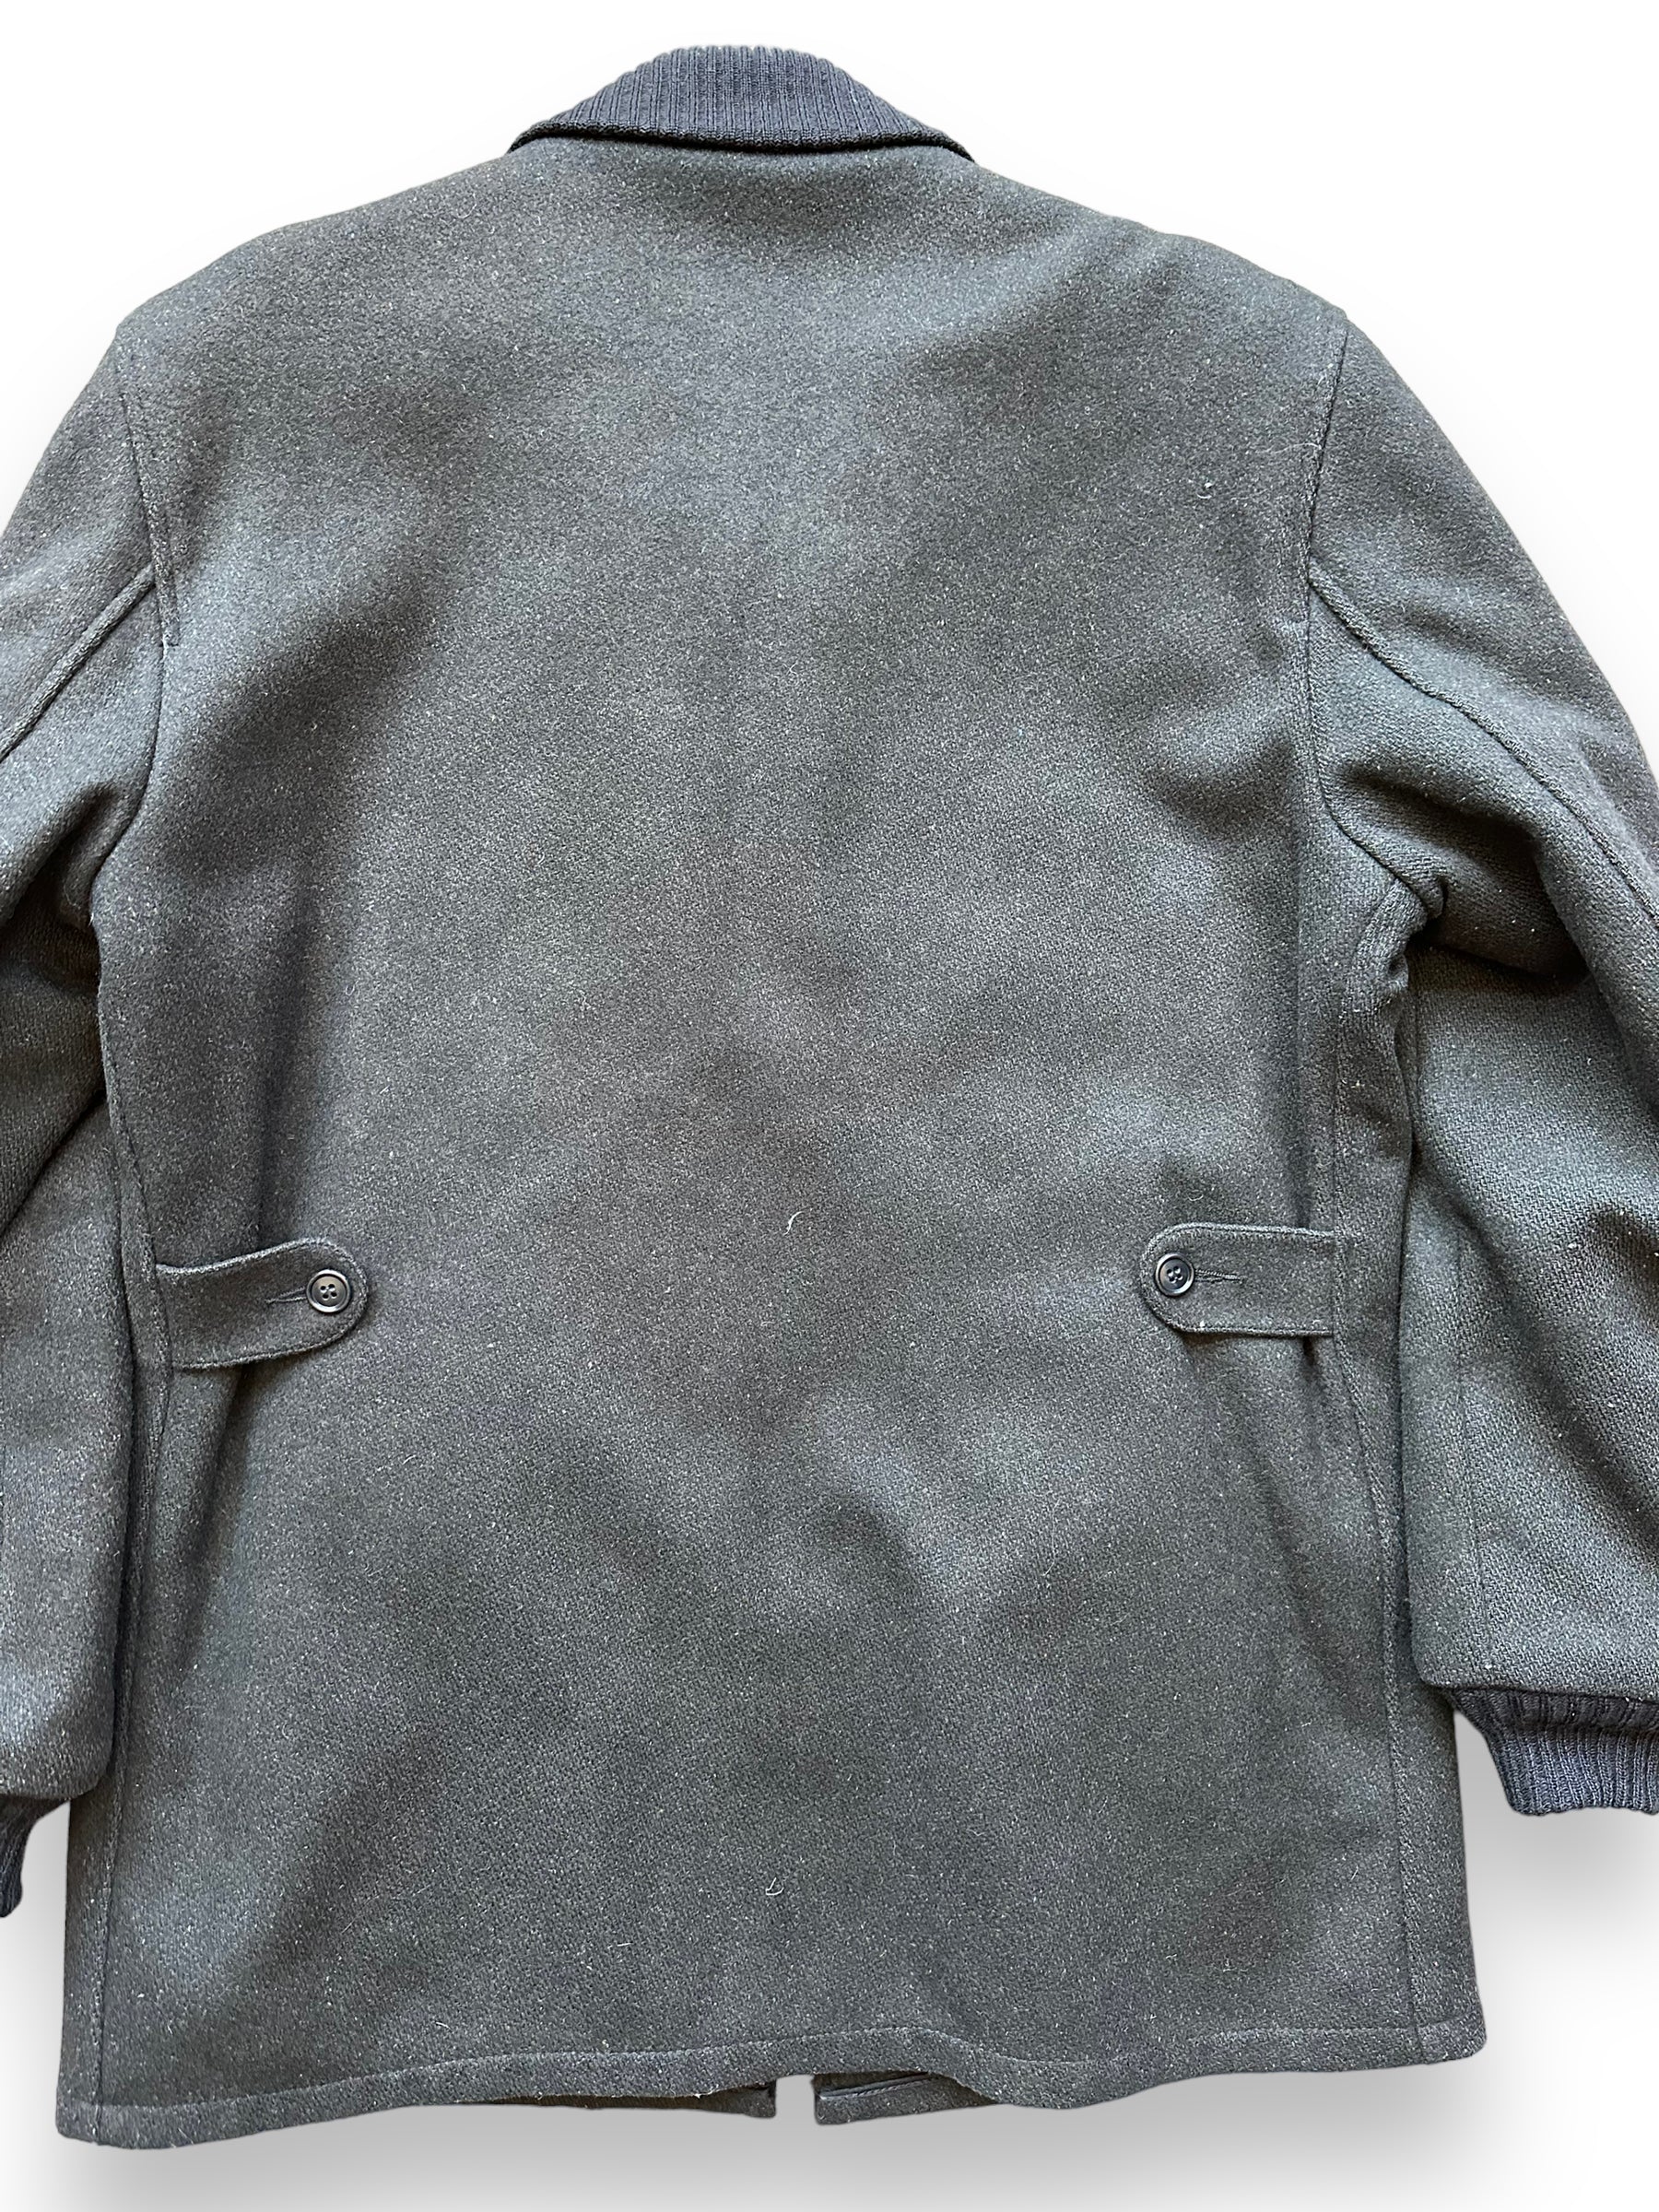 Rear Detail on Vintage Lakeland Wool Clicker Jacket SZ 42L |  Barn Owl Vintage Goods | Vintage Clicker Coat Seattle